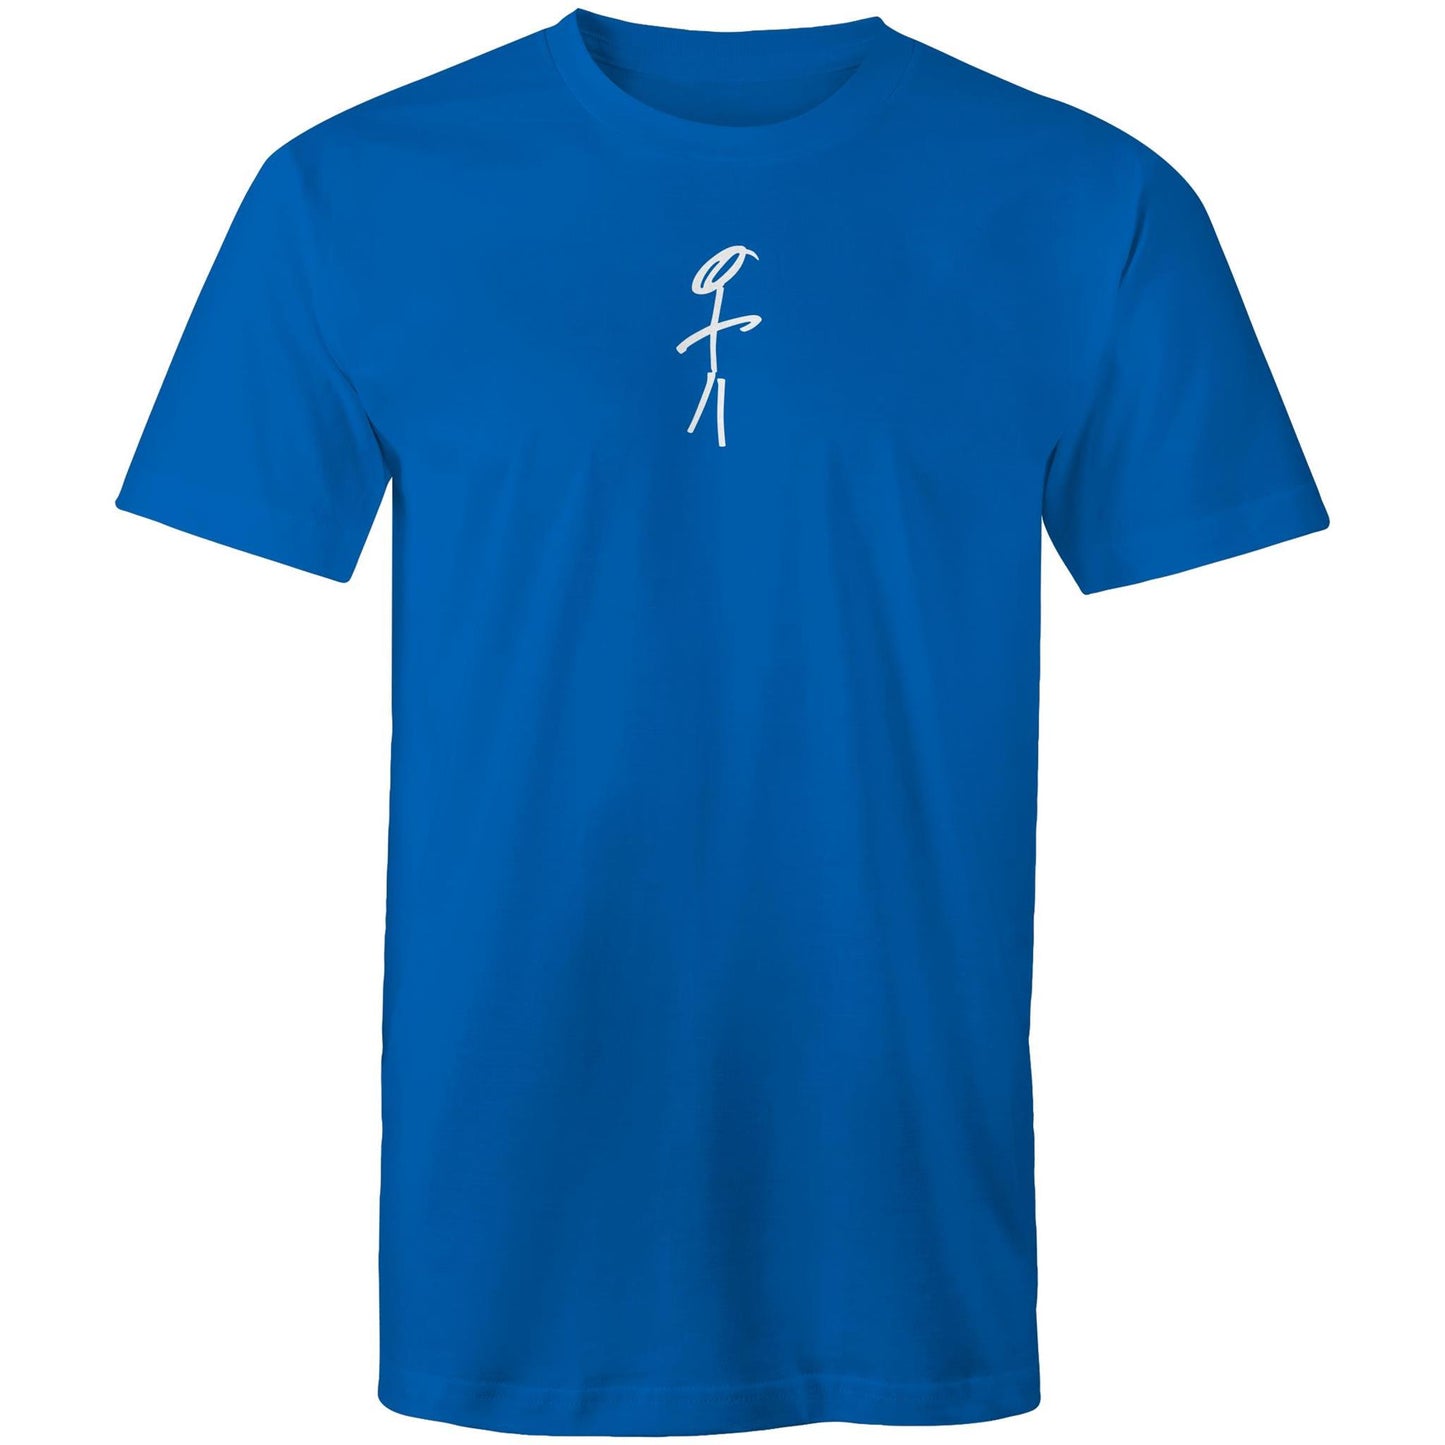 Stick Man T Shirts for Men (Unisex)